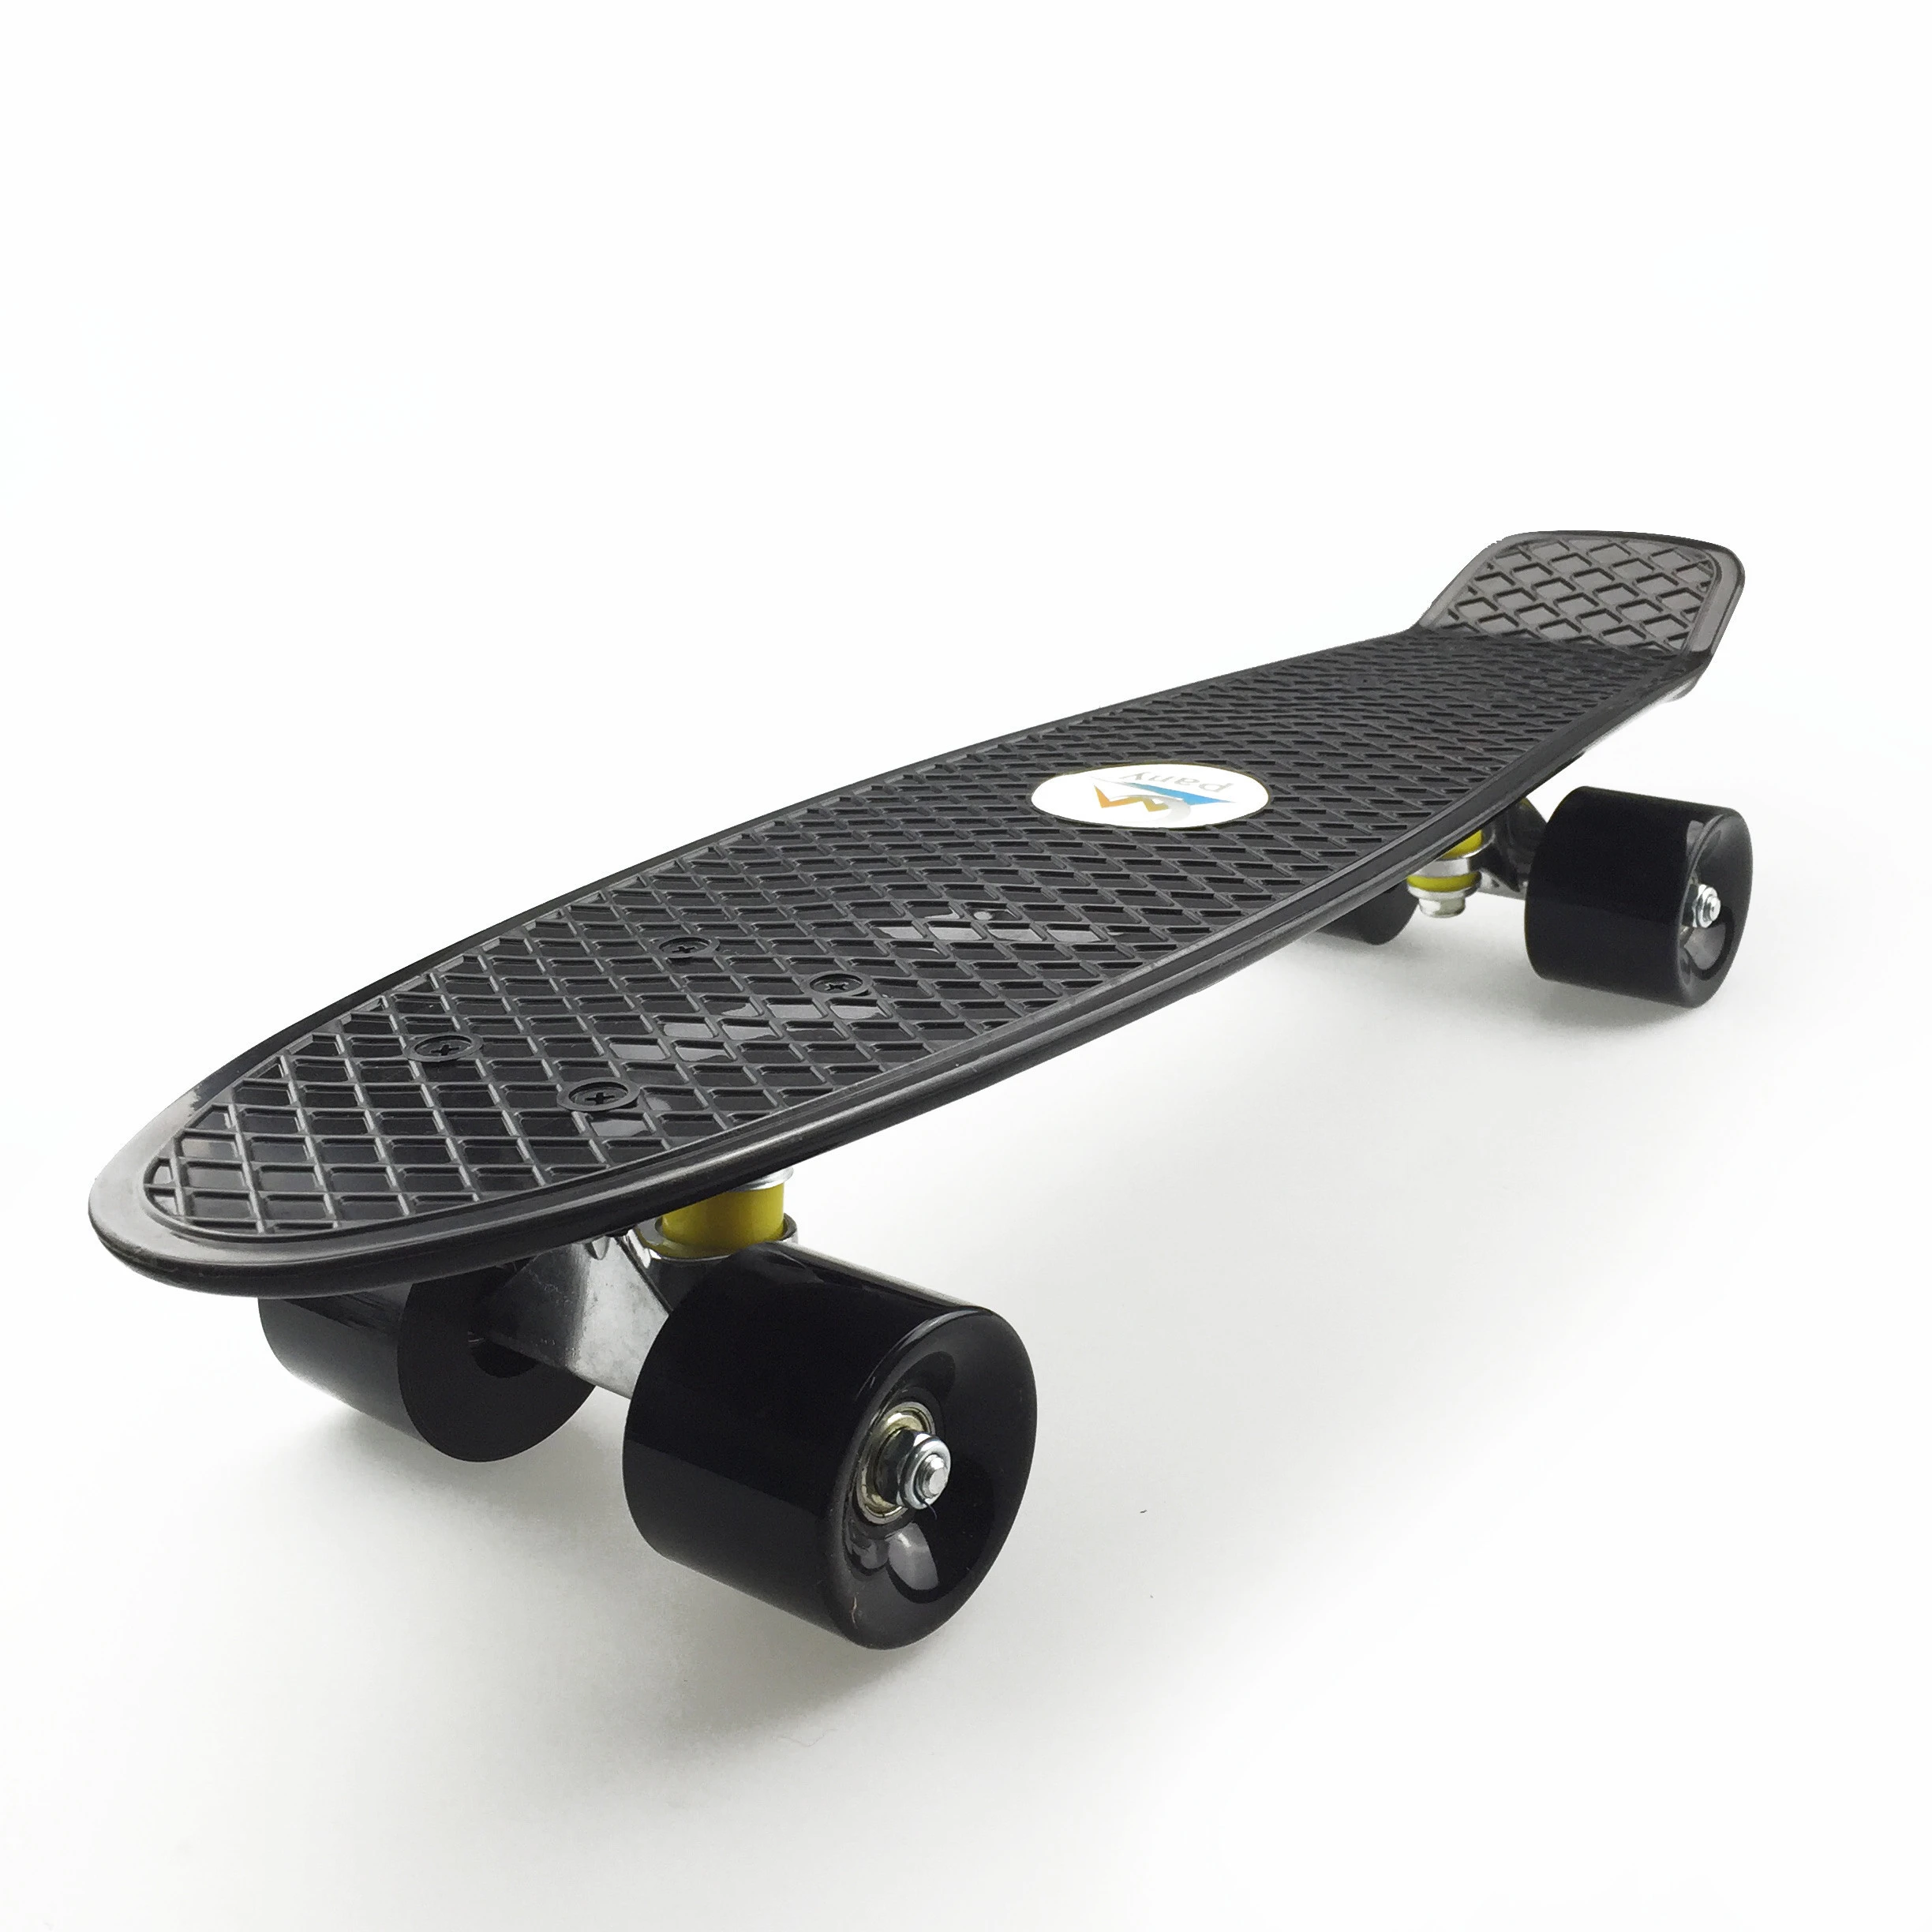 Ouweinuo 22 inch skate board hot sales Plastic Penny fish skateboard